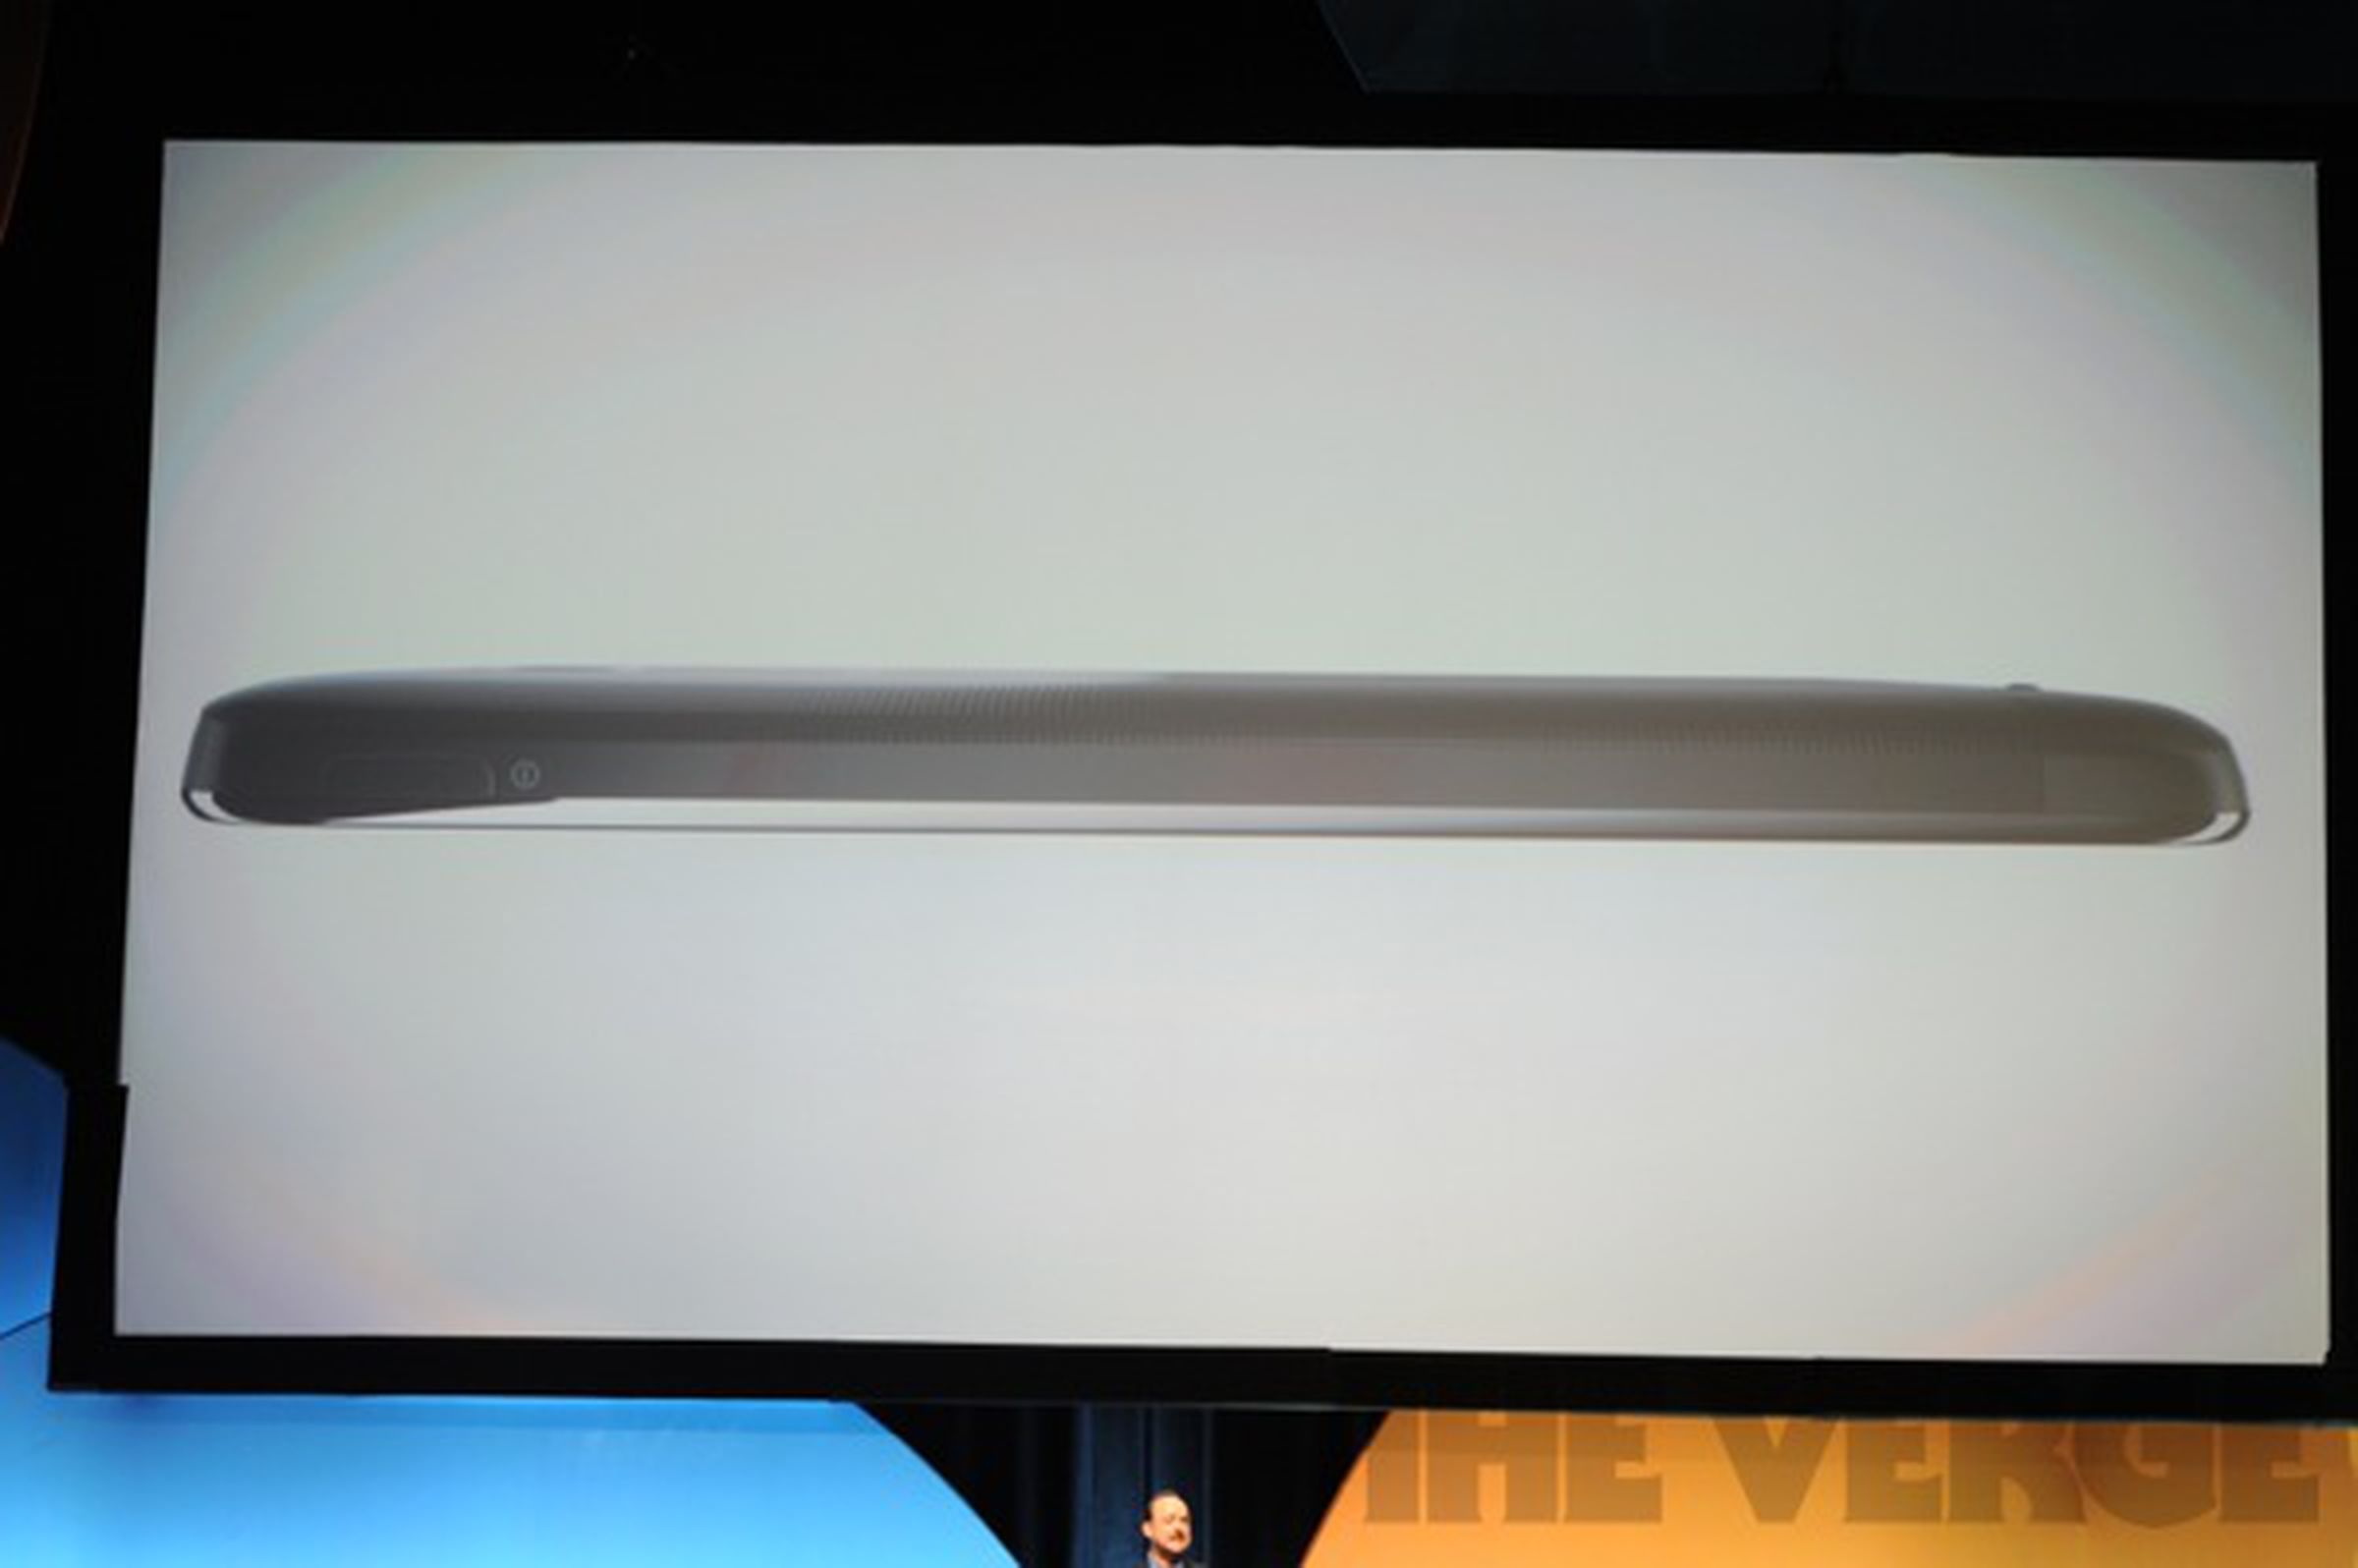 Samsung Galaxy S II Skyrocket HD announcement photos